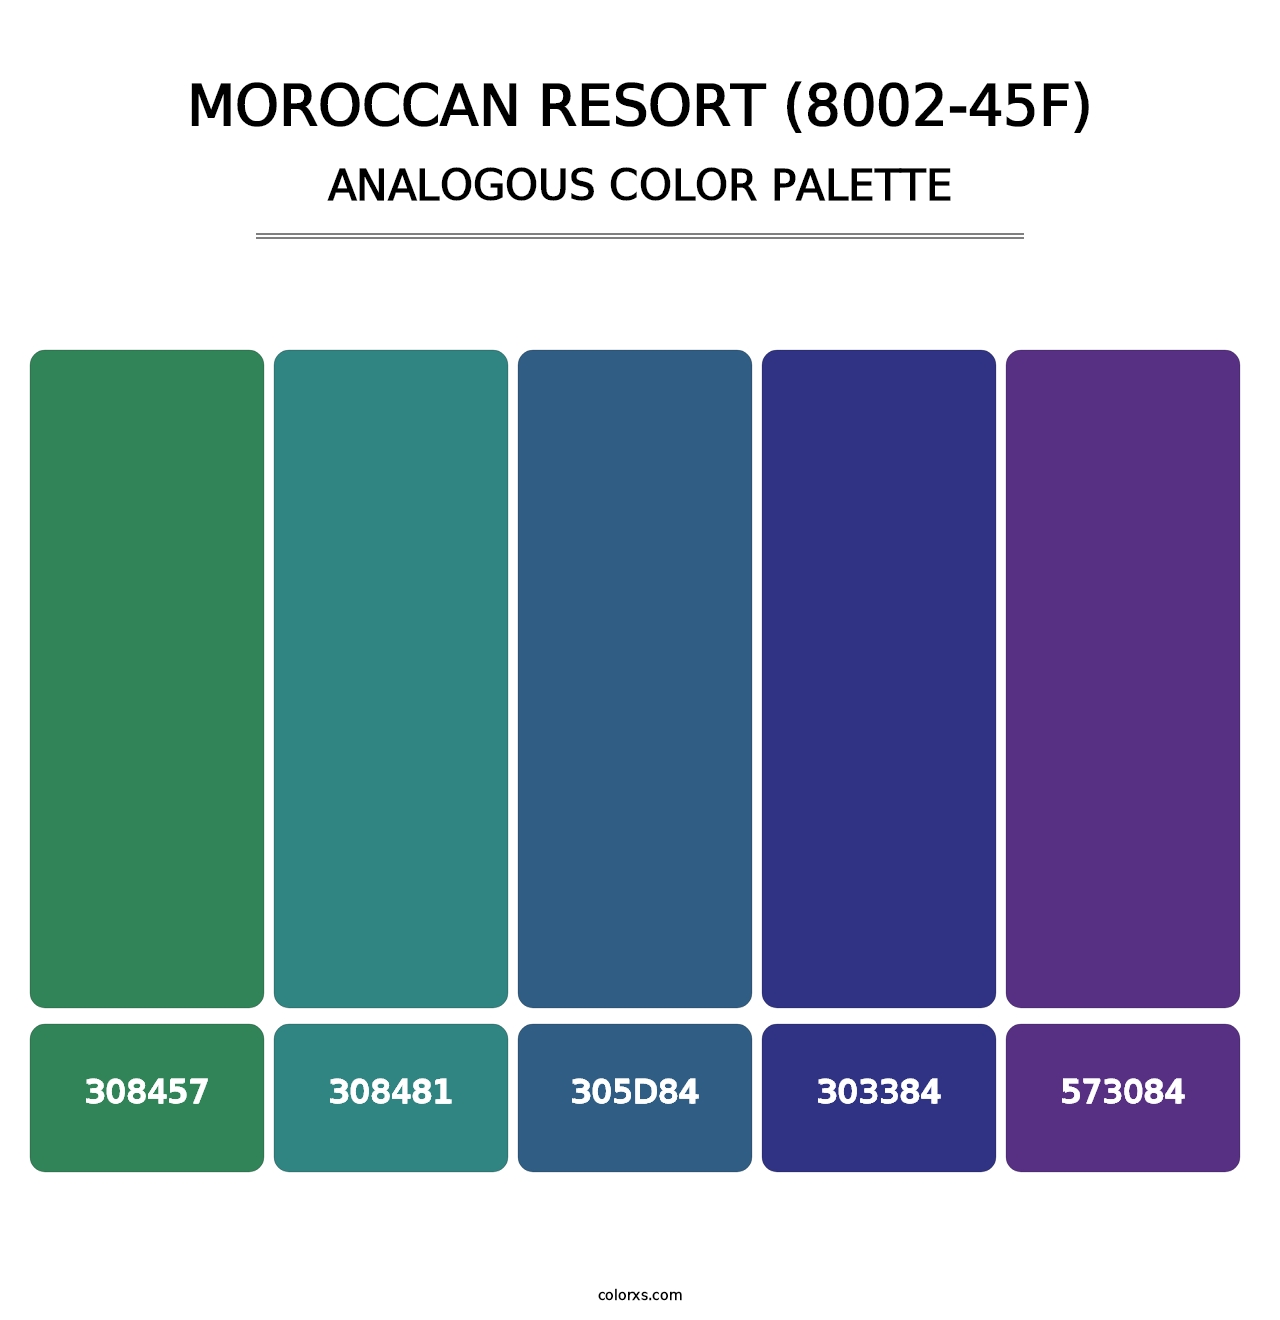 Moroccan Resort (8002-45F) - Analogous Color Palette